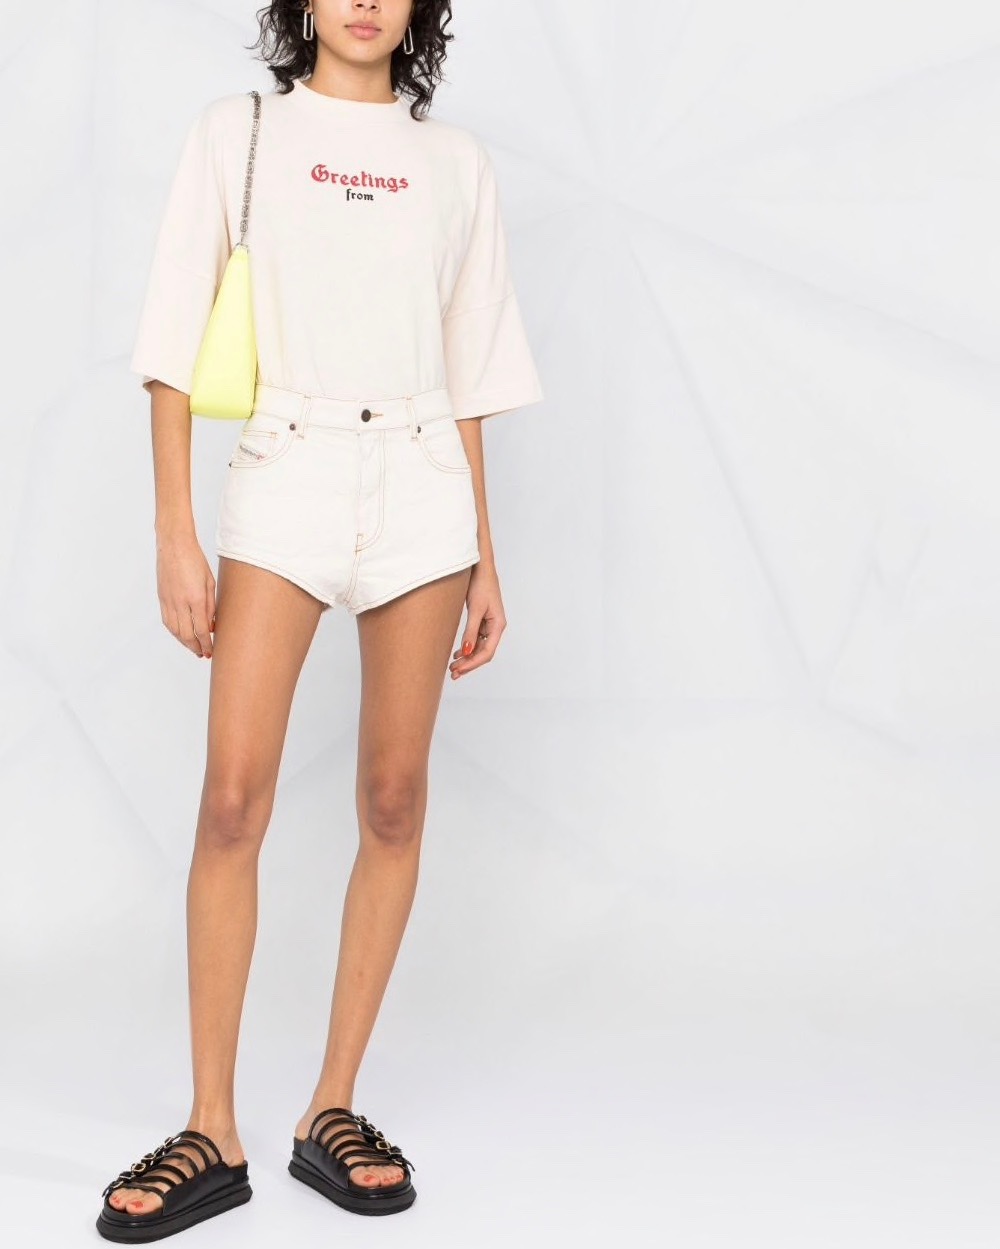 White Denim Shorts Destined for Summer - theFashionSpot